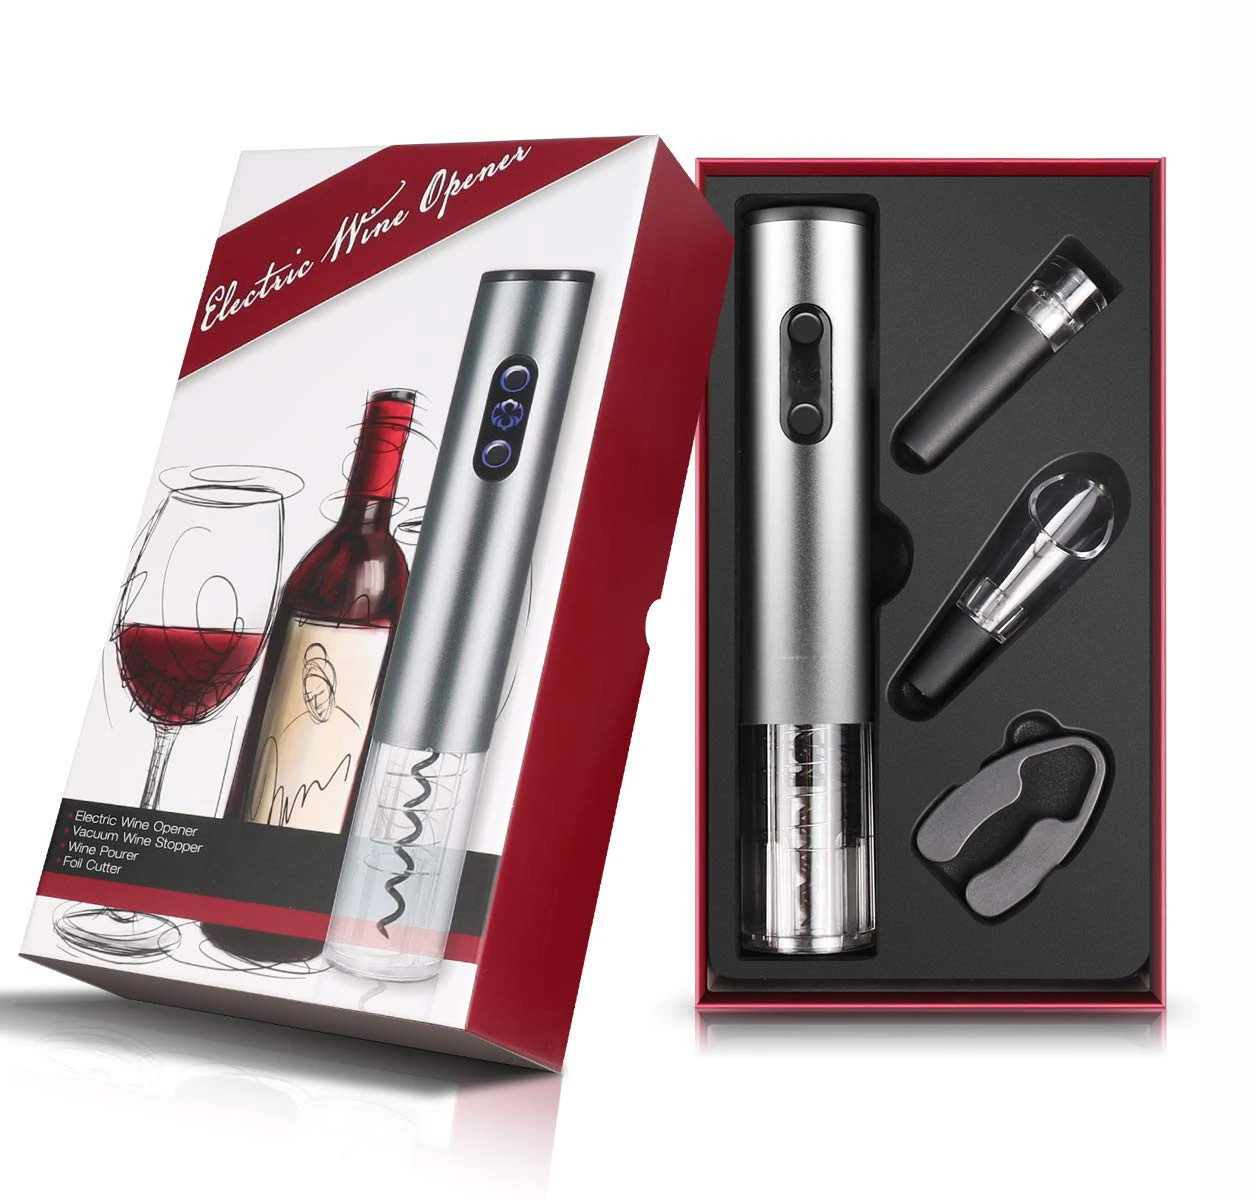 Trending 2019 gadgets Wine Accessories Electric Wine Opener corkscrew Set Amazon wedding favors wine stopper set gift